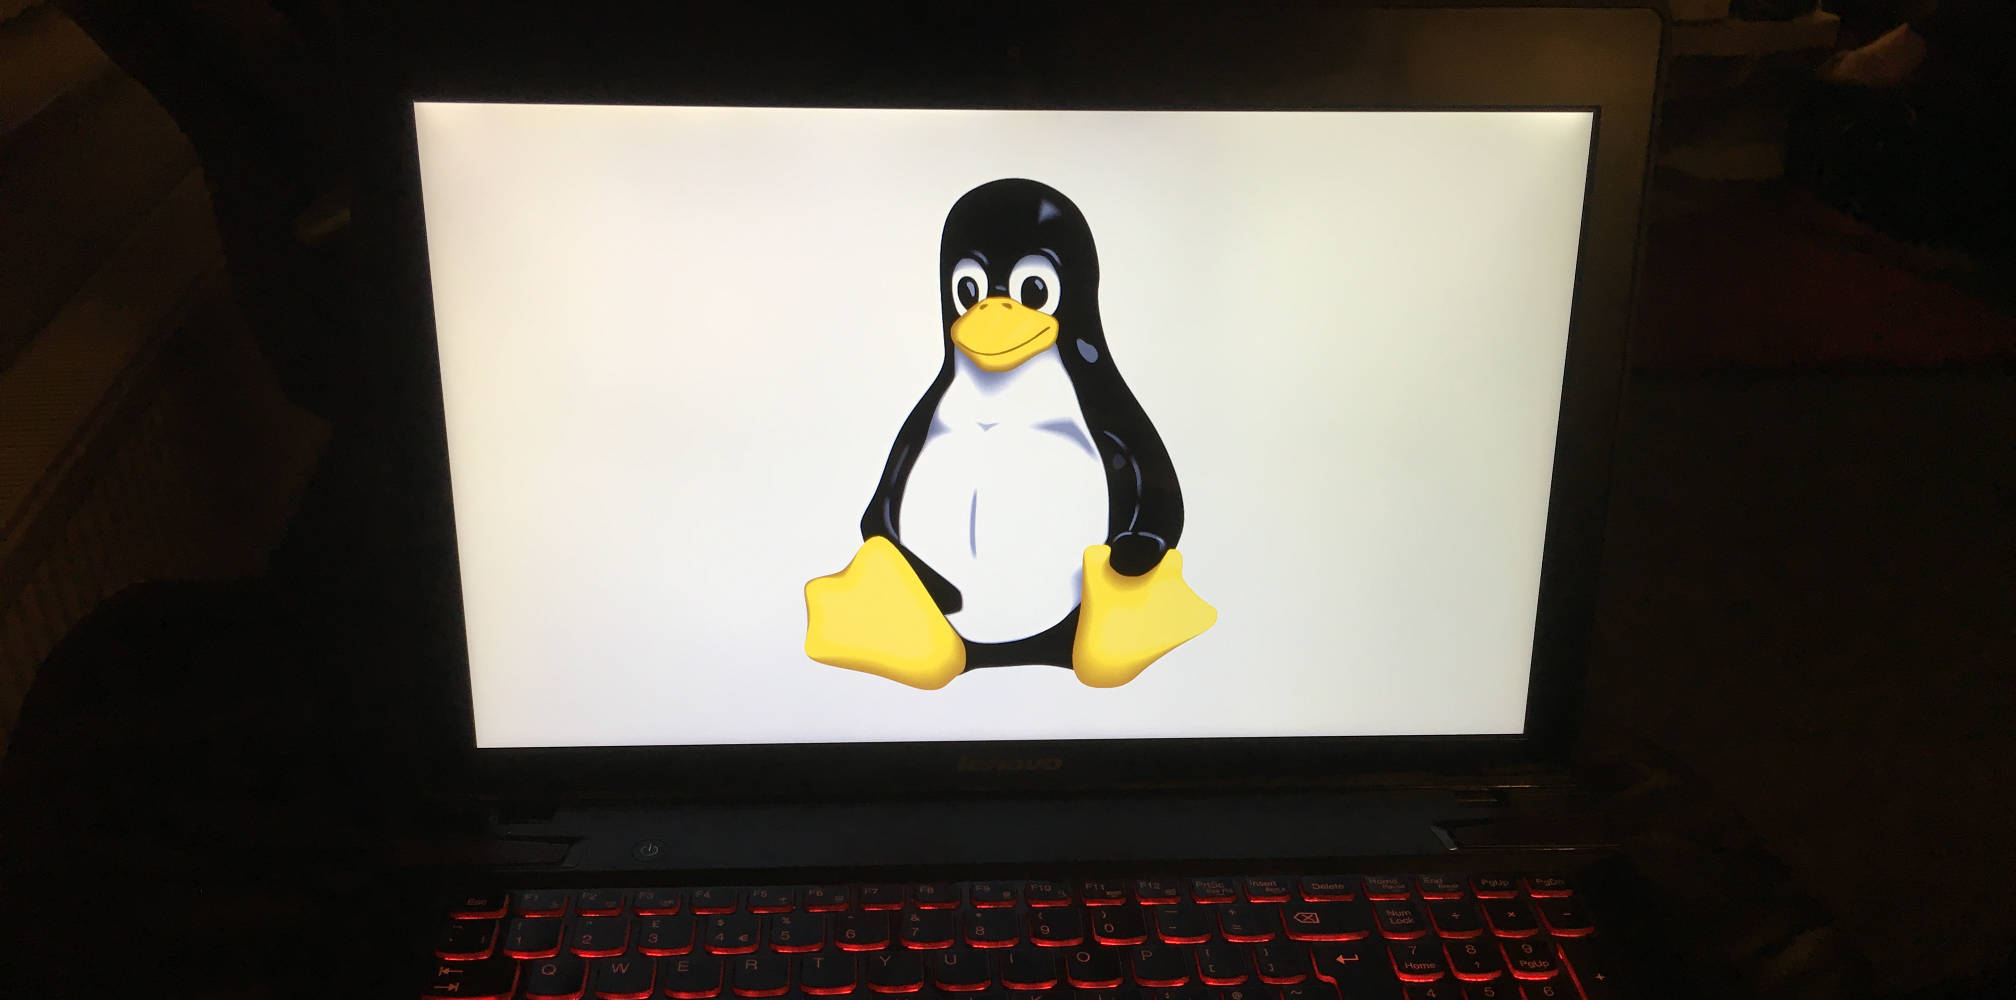 Why Linux still doesn’t rule the desktop market